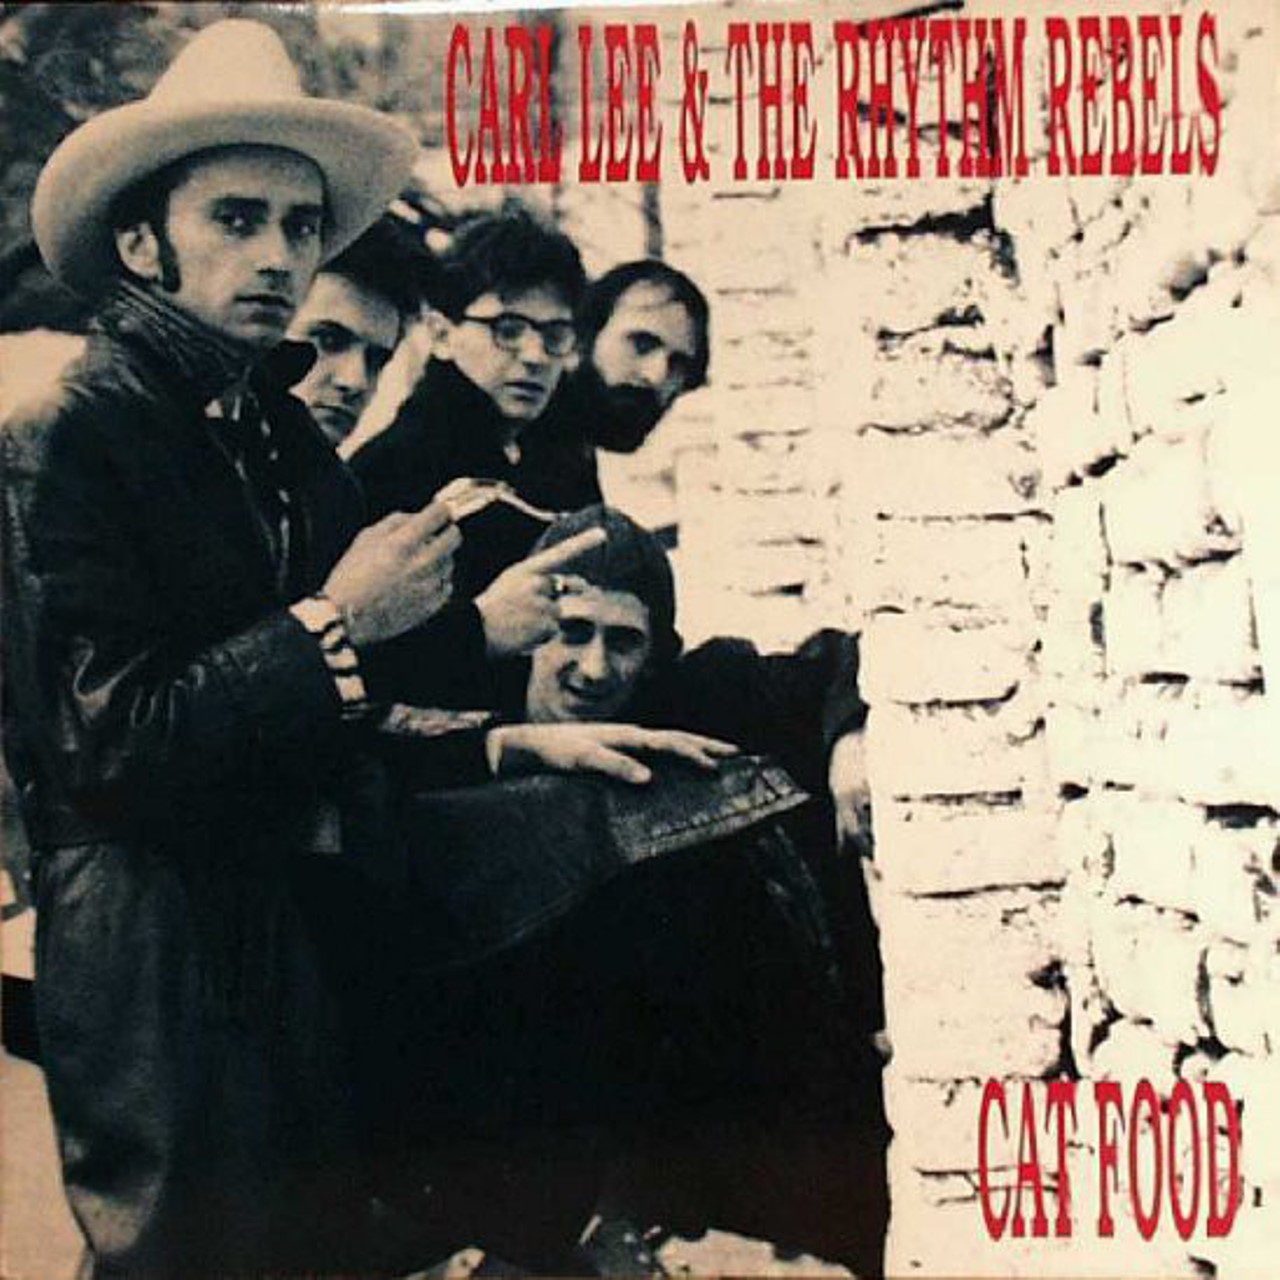 Carl Lee & The Rhythm Rebels - Cat Food cover album